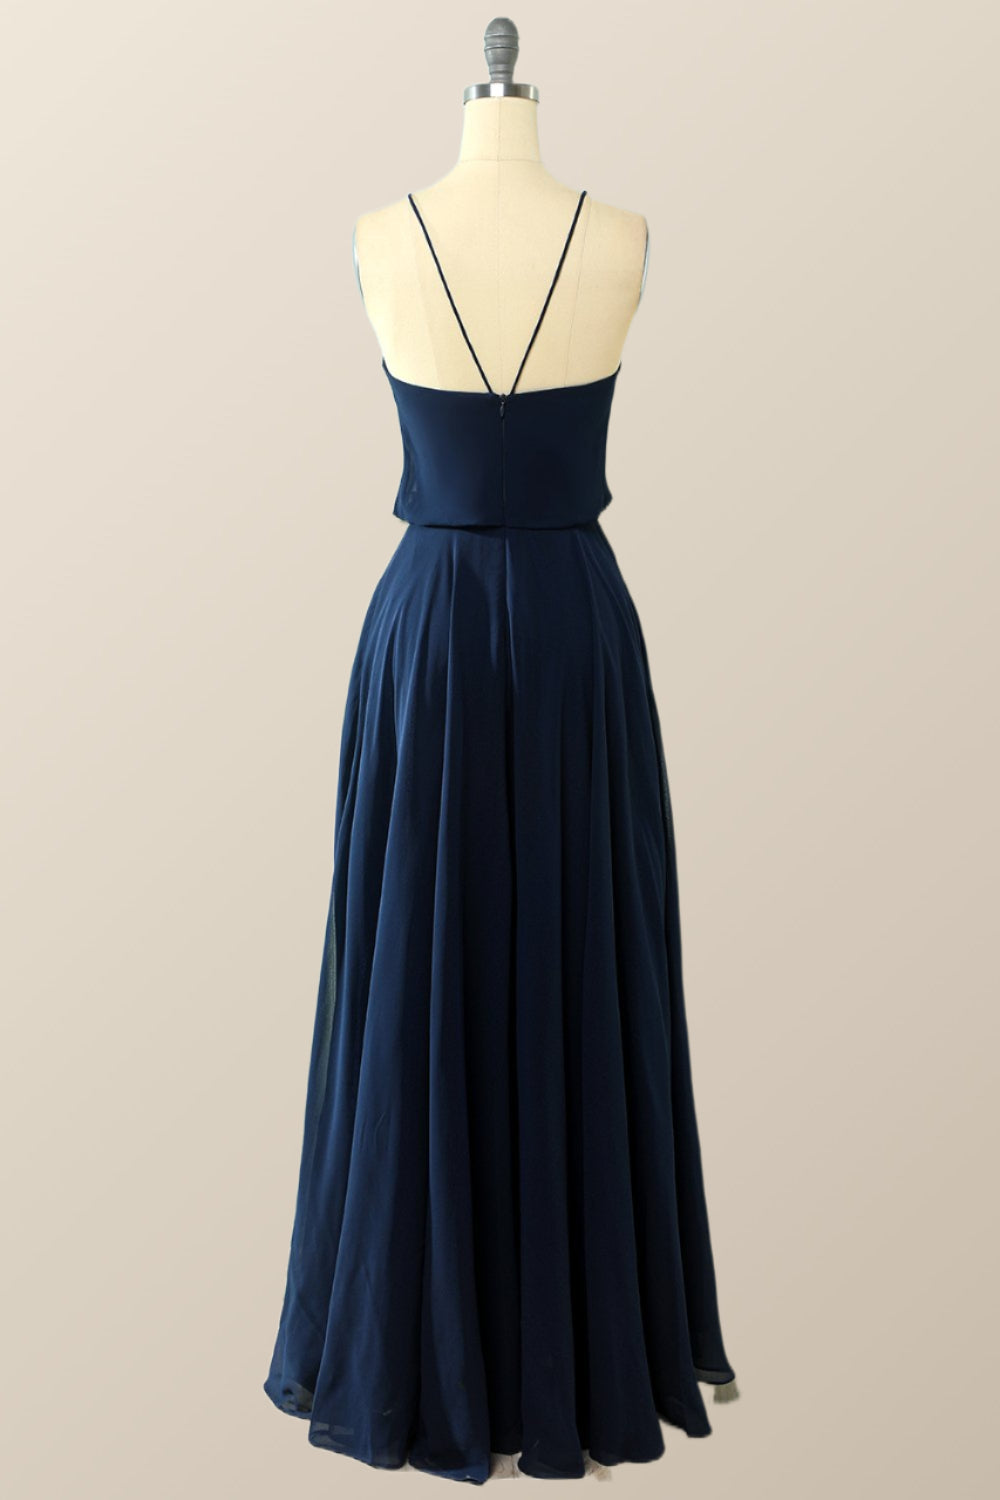 Navy Blue Blouson Bodice Chiffon Long Dress